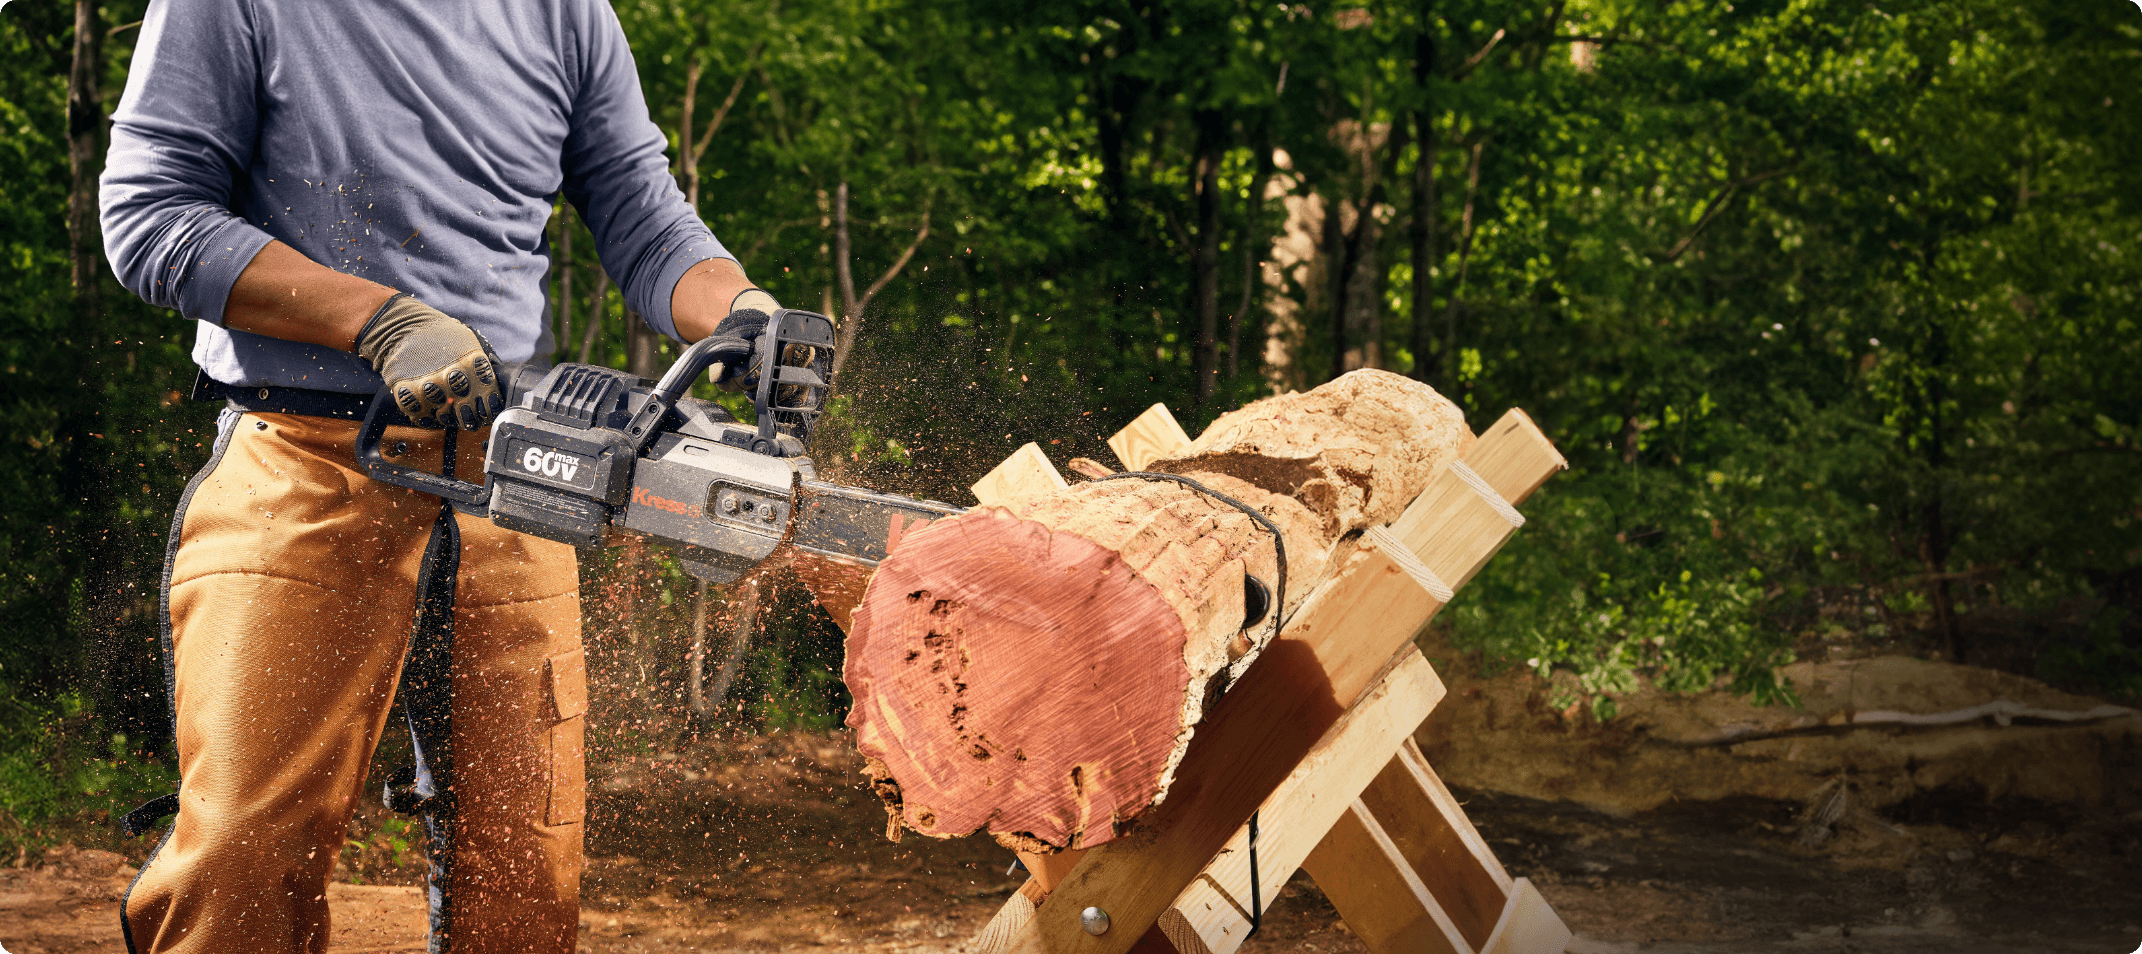 Kress Commercial  60 V 18'' brushless chainsaw — tool only 1